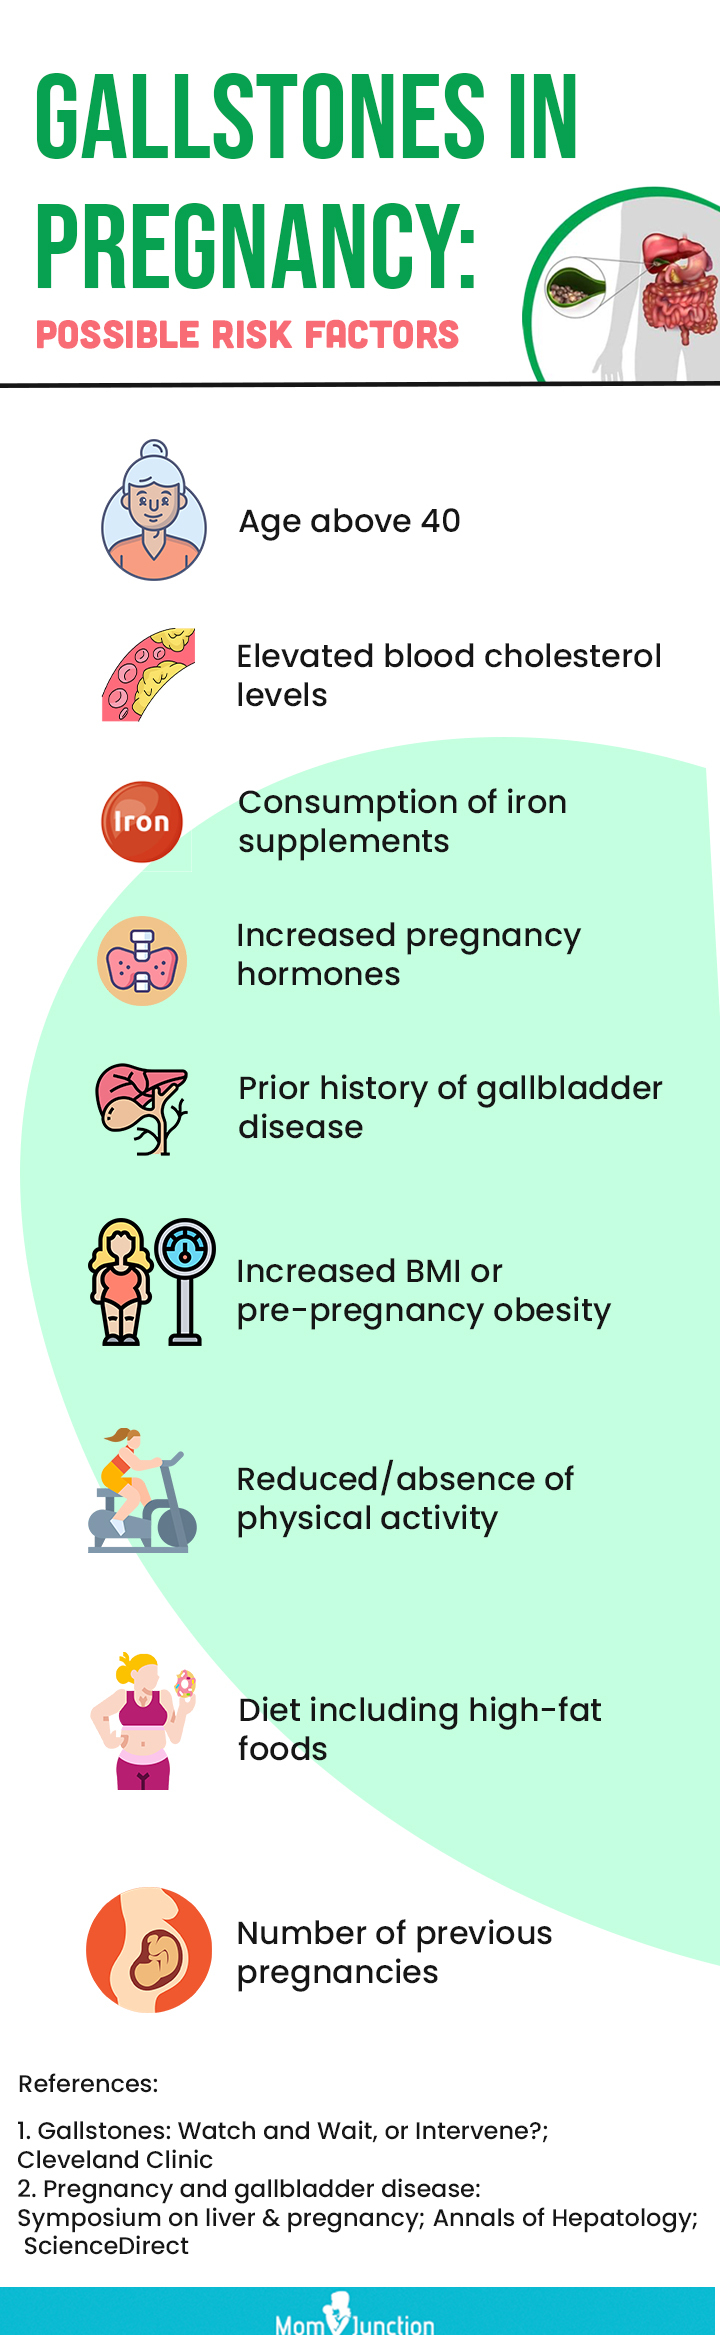 gallstones in pregnancy possible risk factors [infographic]